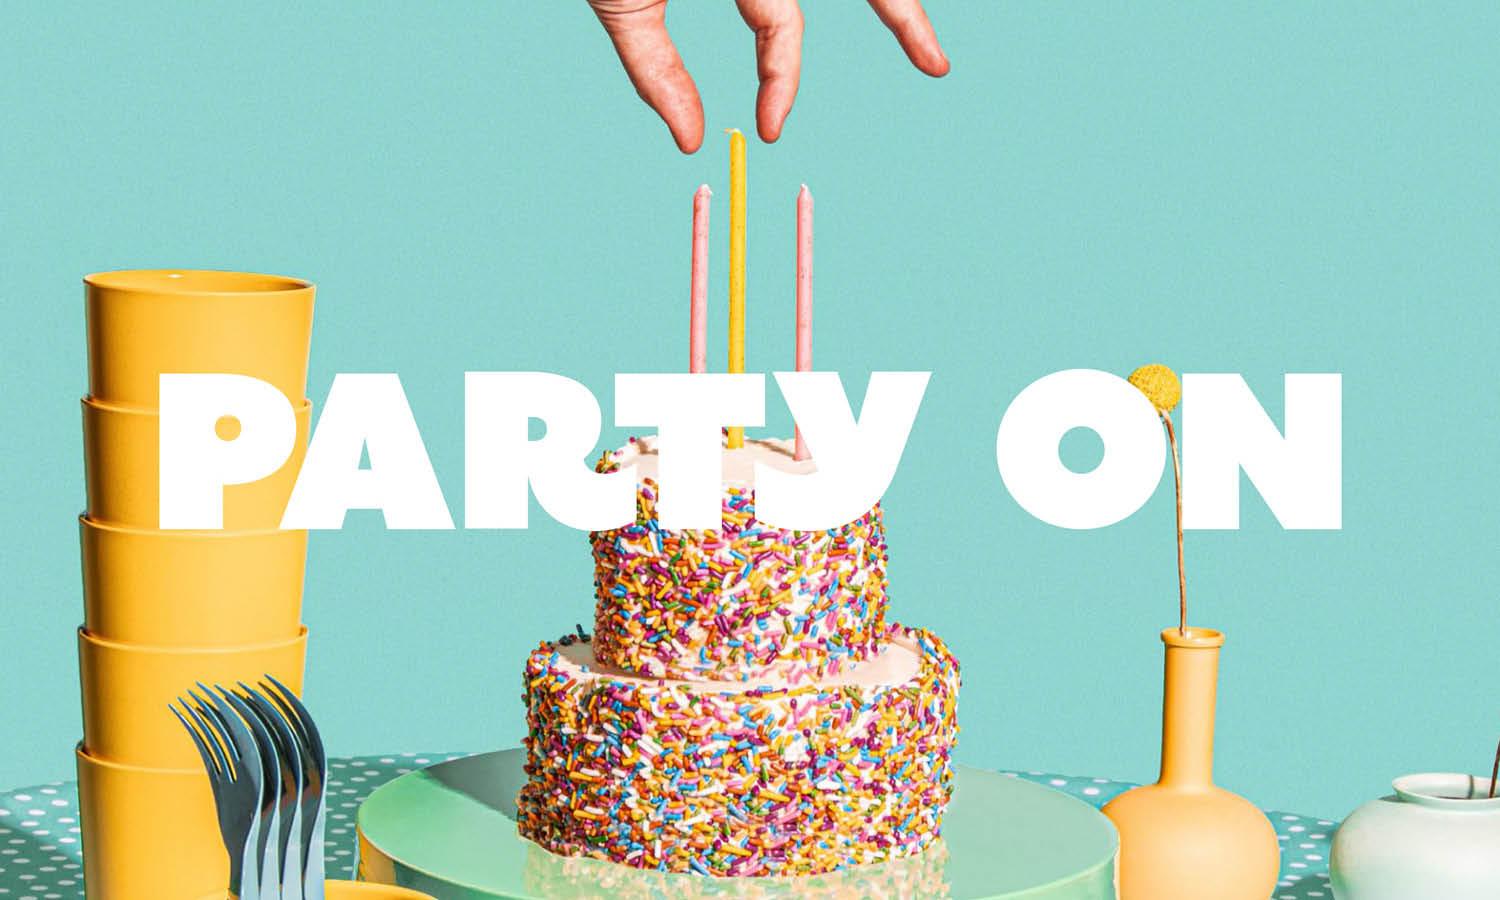 30 Best Party Logo Design Ideas You Should Check - Kreafolk